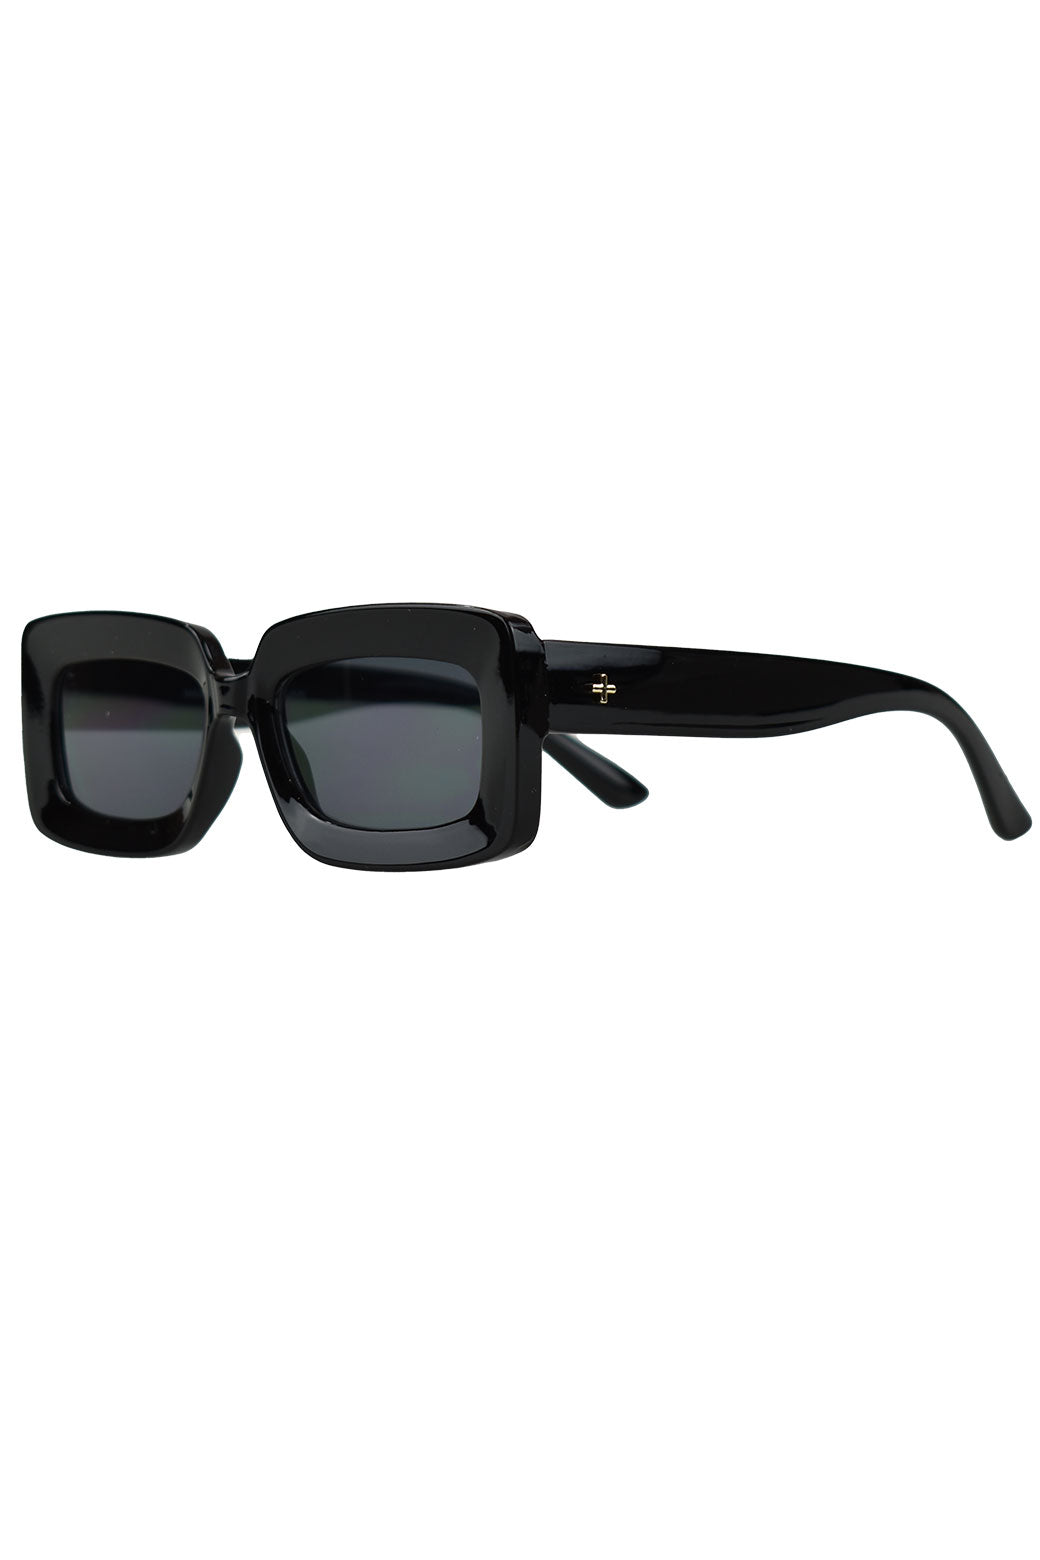 Peta + Jain Blurred Sunglasses Black